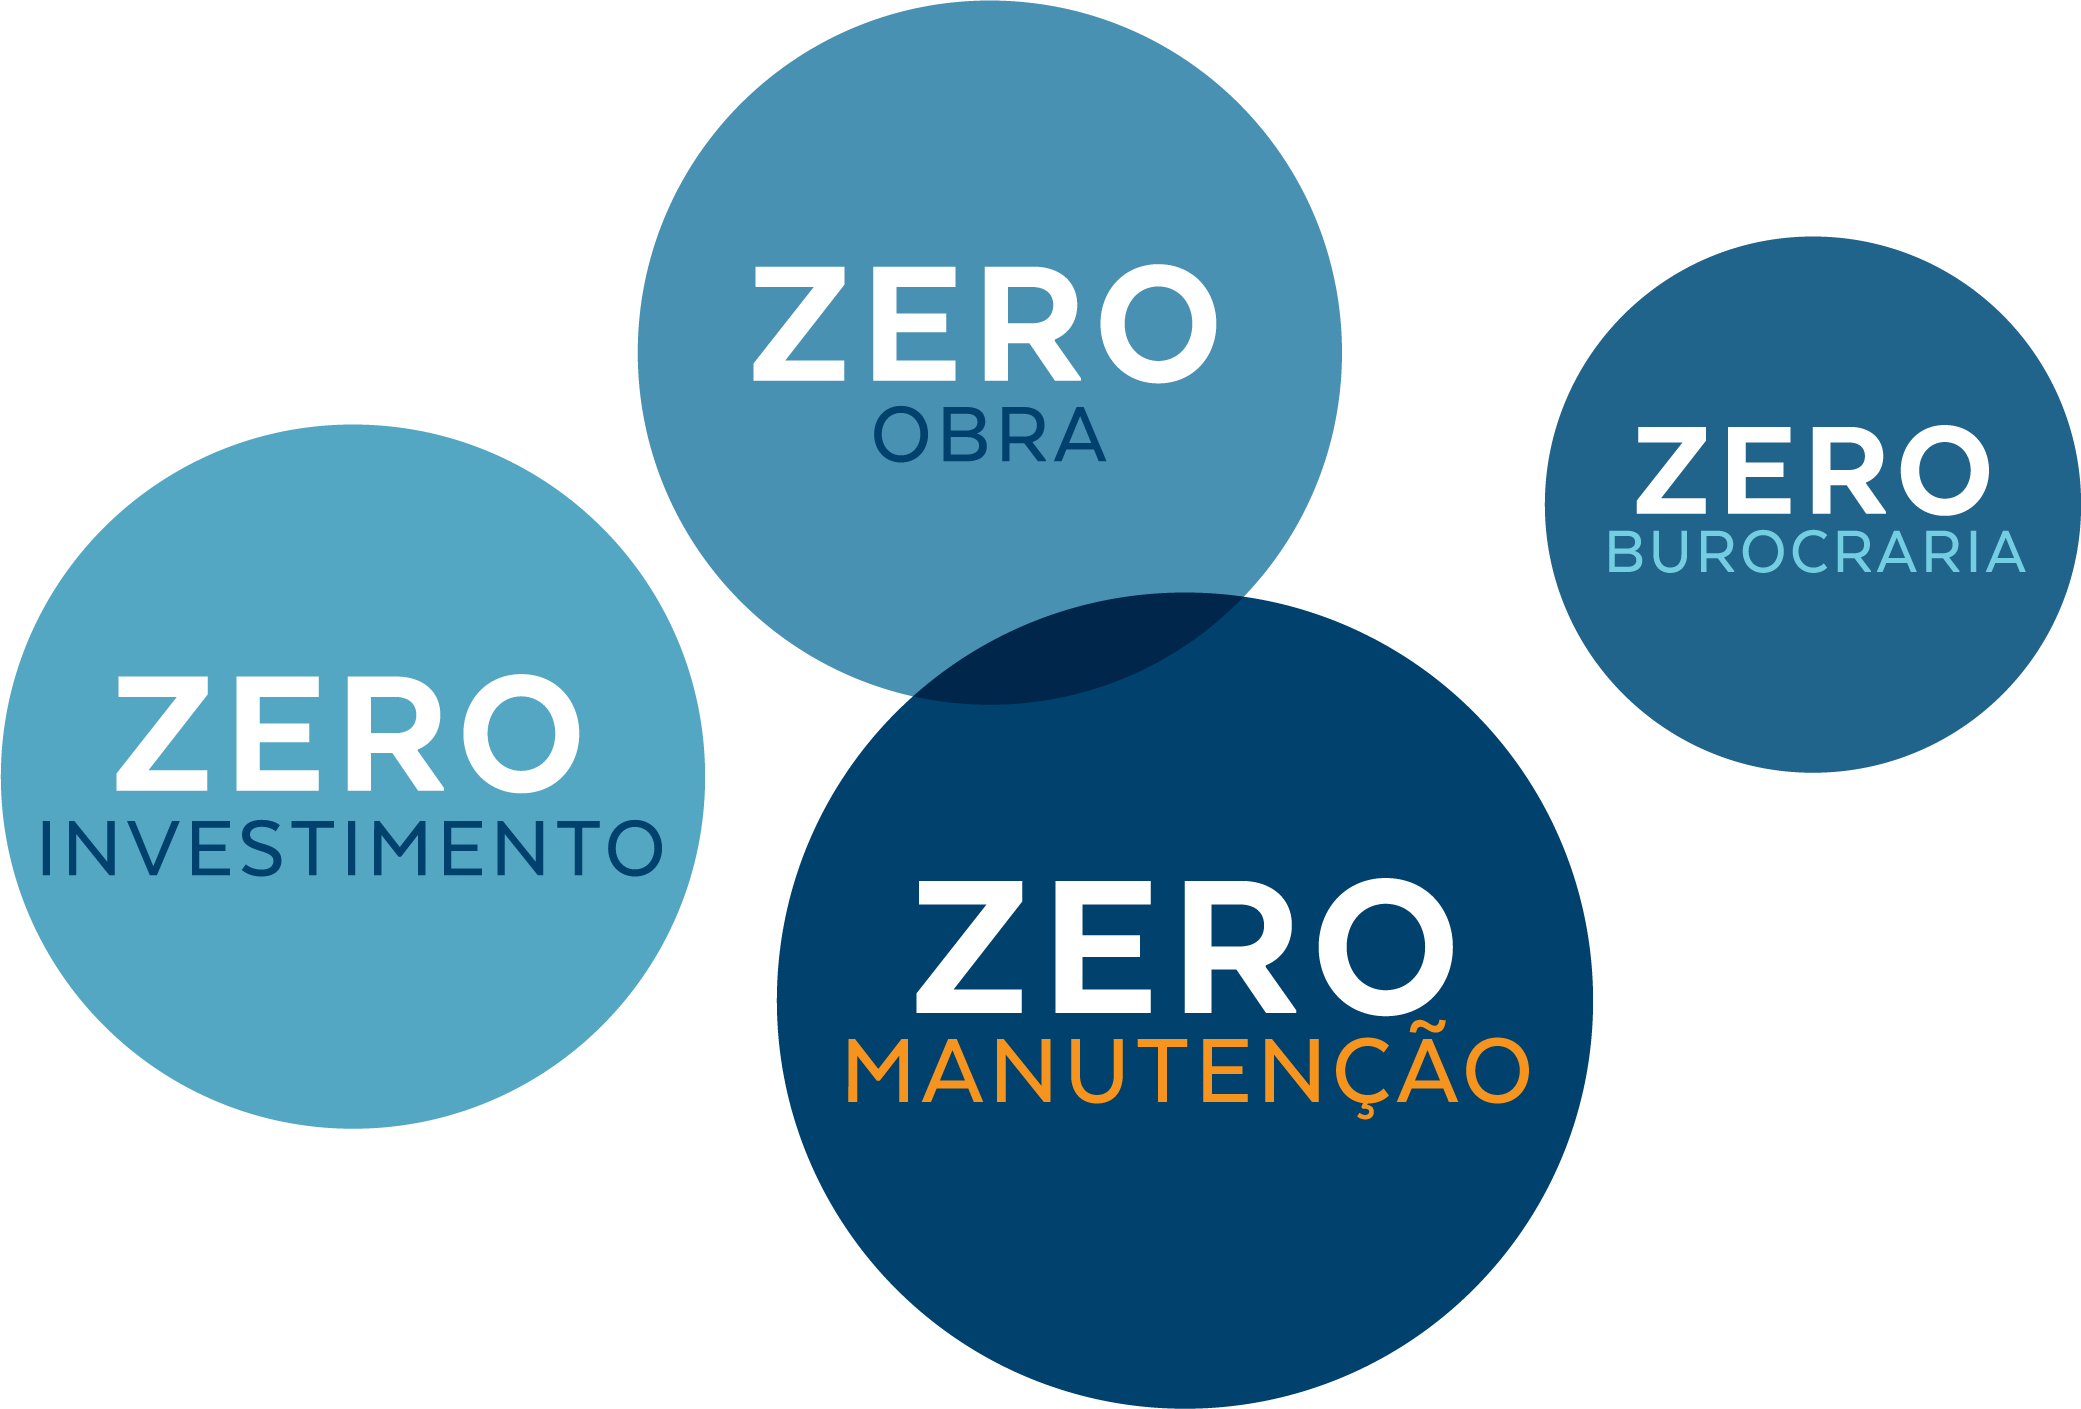 Zero Invesimento, Zero Obra, Zero Burocracia, Zero Manutenção